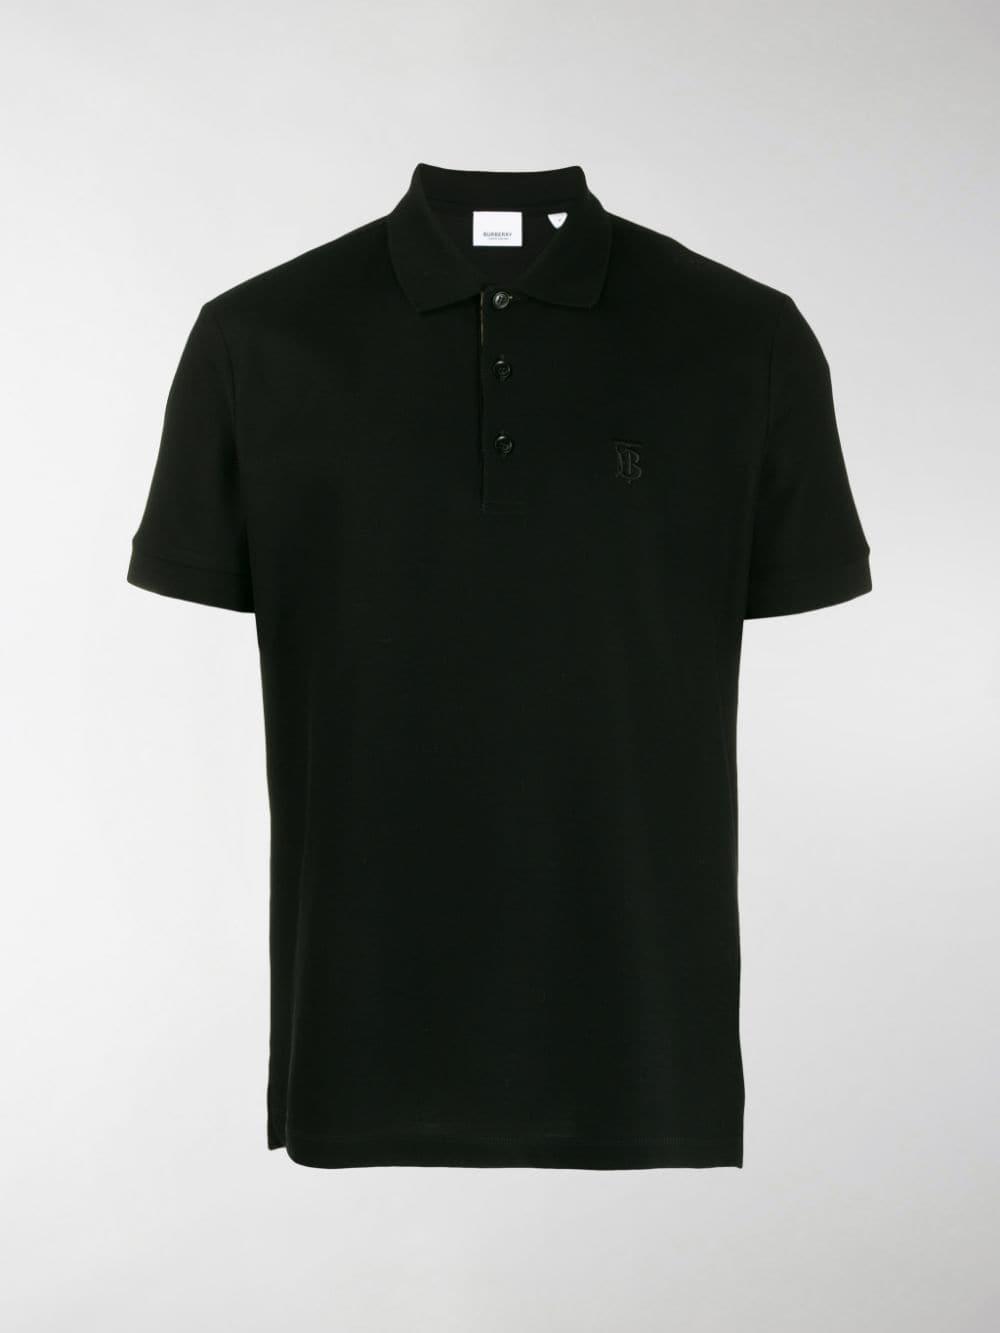 Burberry Monogram Motif Cotton Piqué Polo Shirt in Black for Men - Lyst